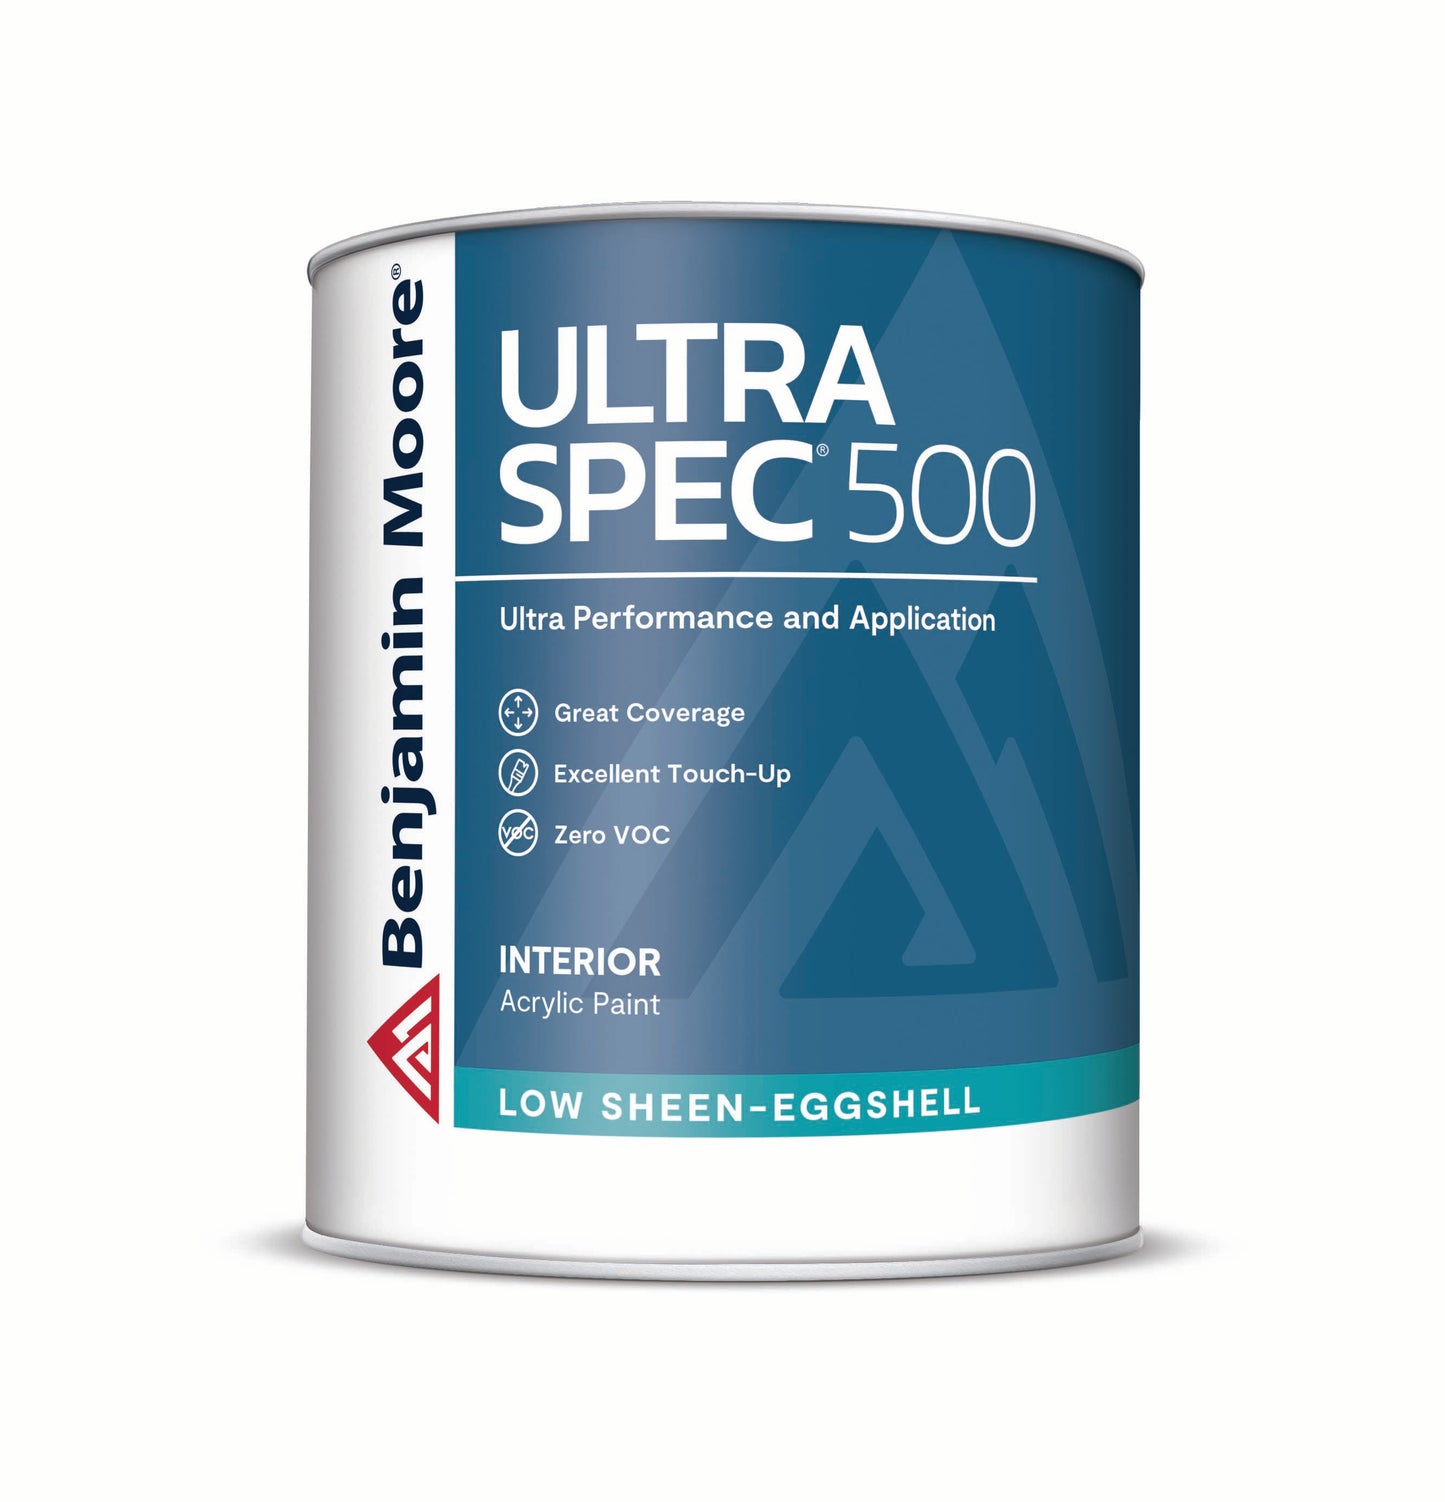 Ultra Spec 500 內部低光澤蛋殼飾面 537